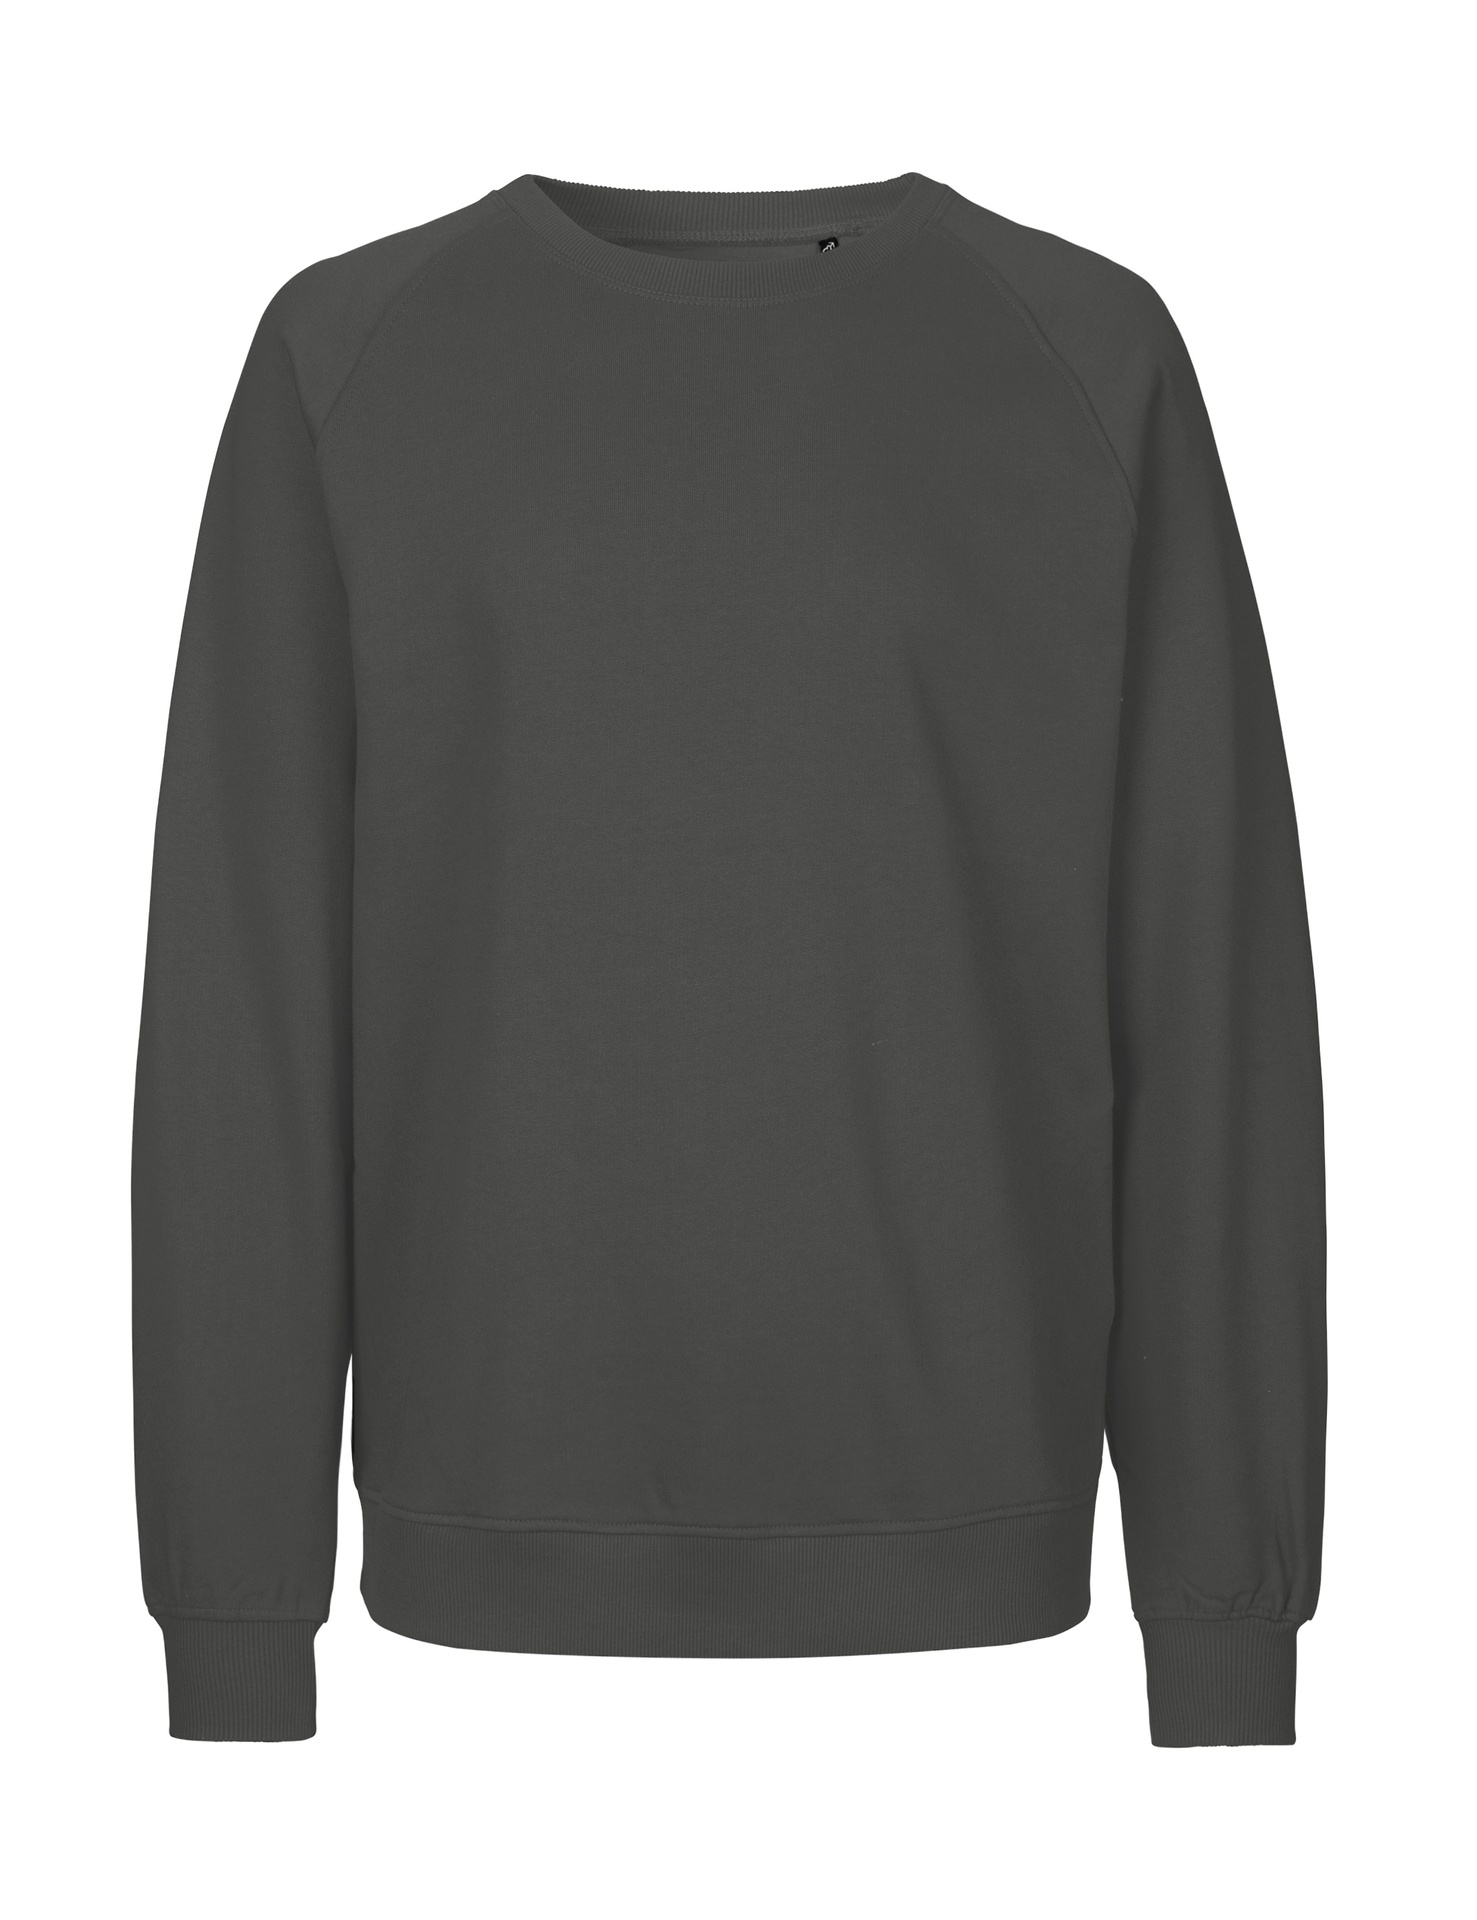 [PR/02689] Unisex Sweatshirt (Charcoal 06, S)